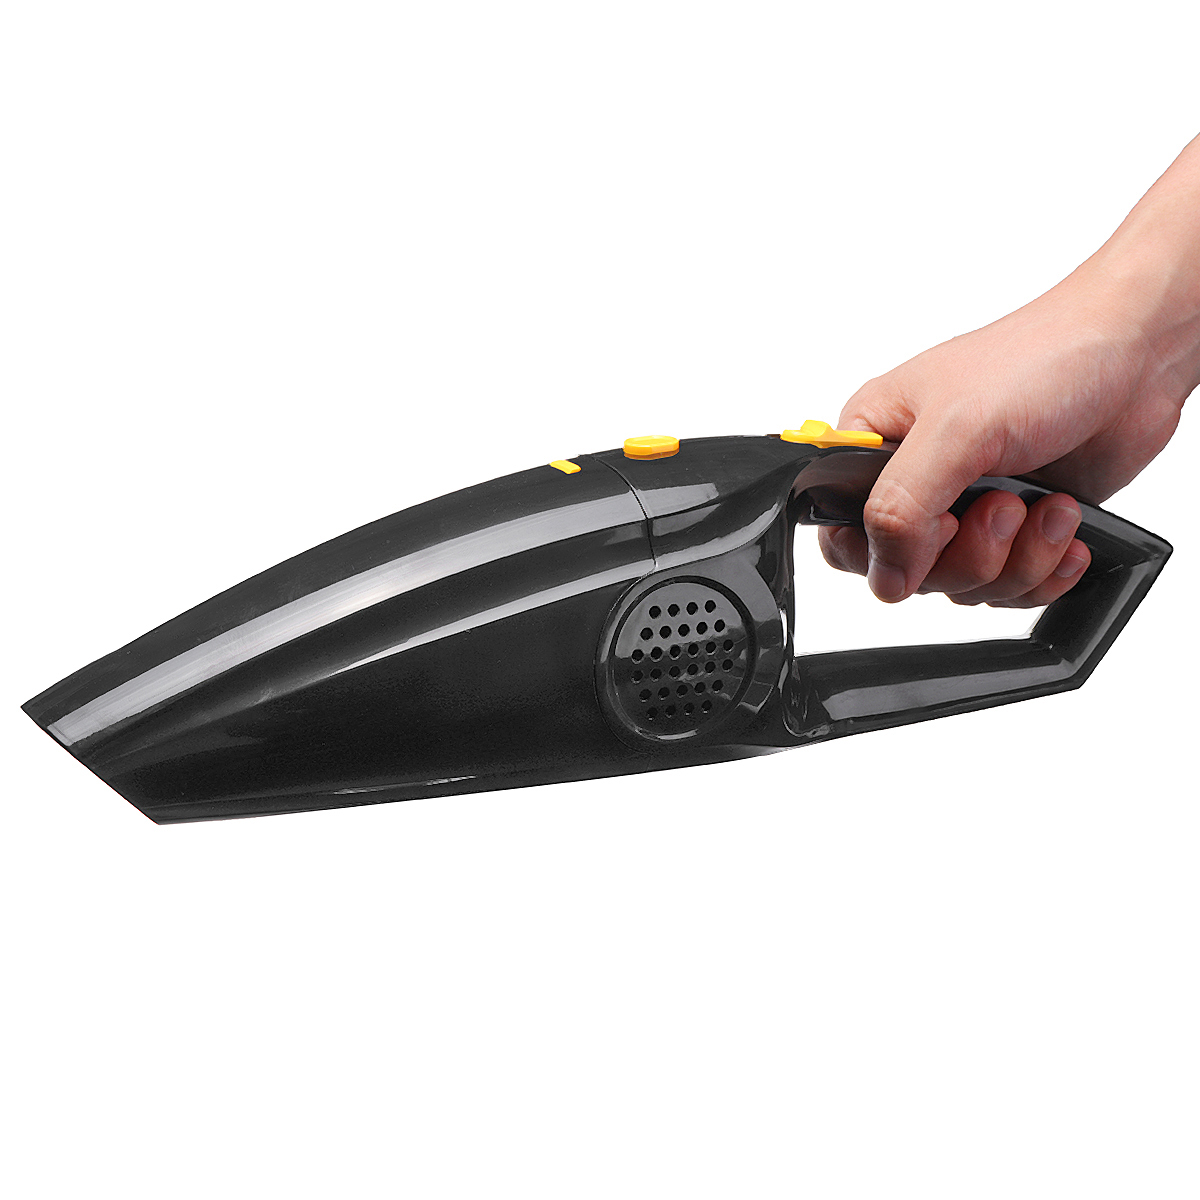 Portable-Vacuum-Cleaner-12V-Cordless-Portable-Handheld-Wet-Dry-Dust-Cleaner-1359349-7